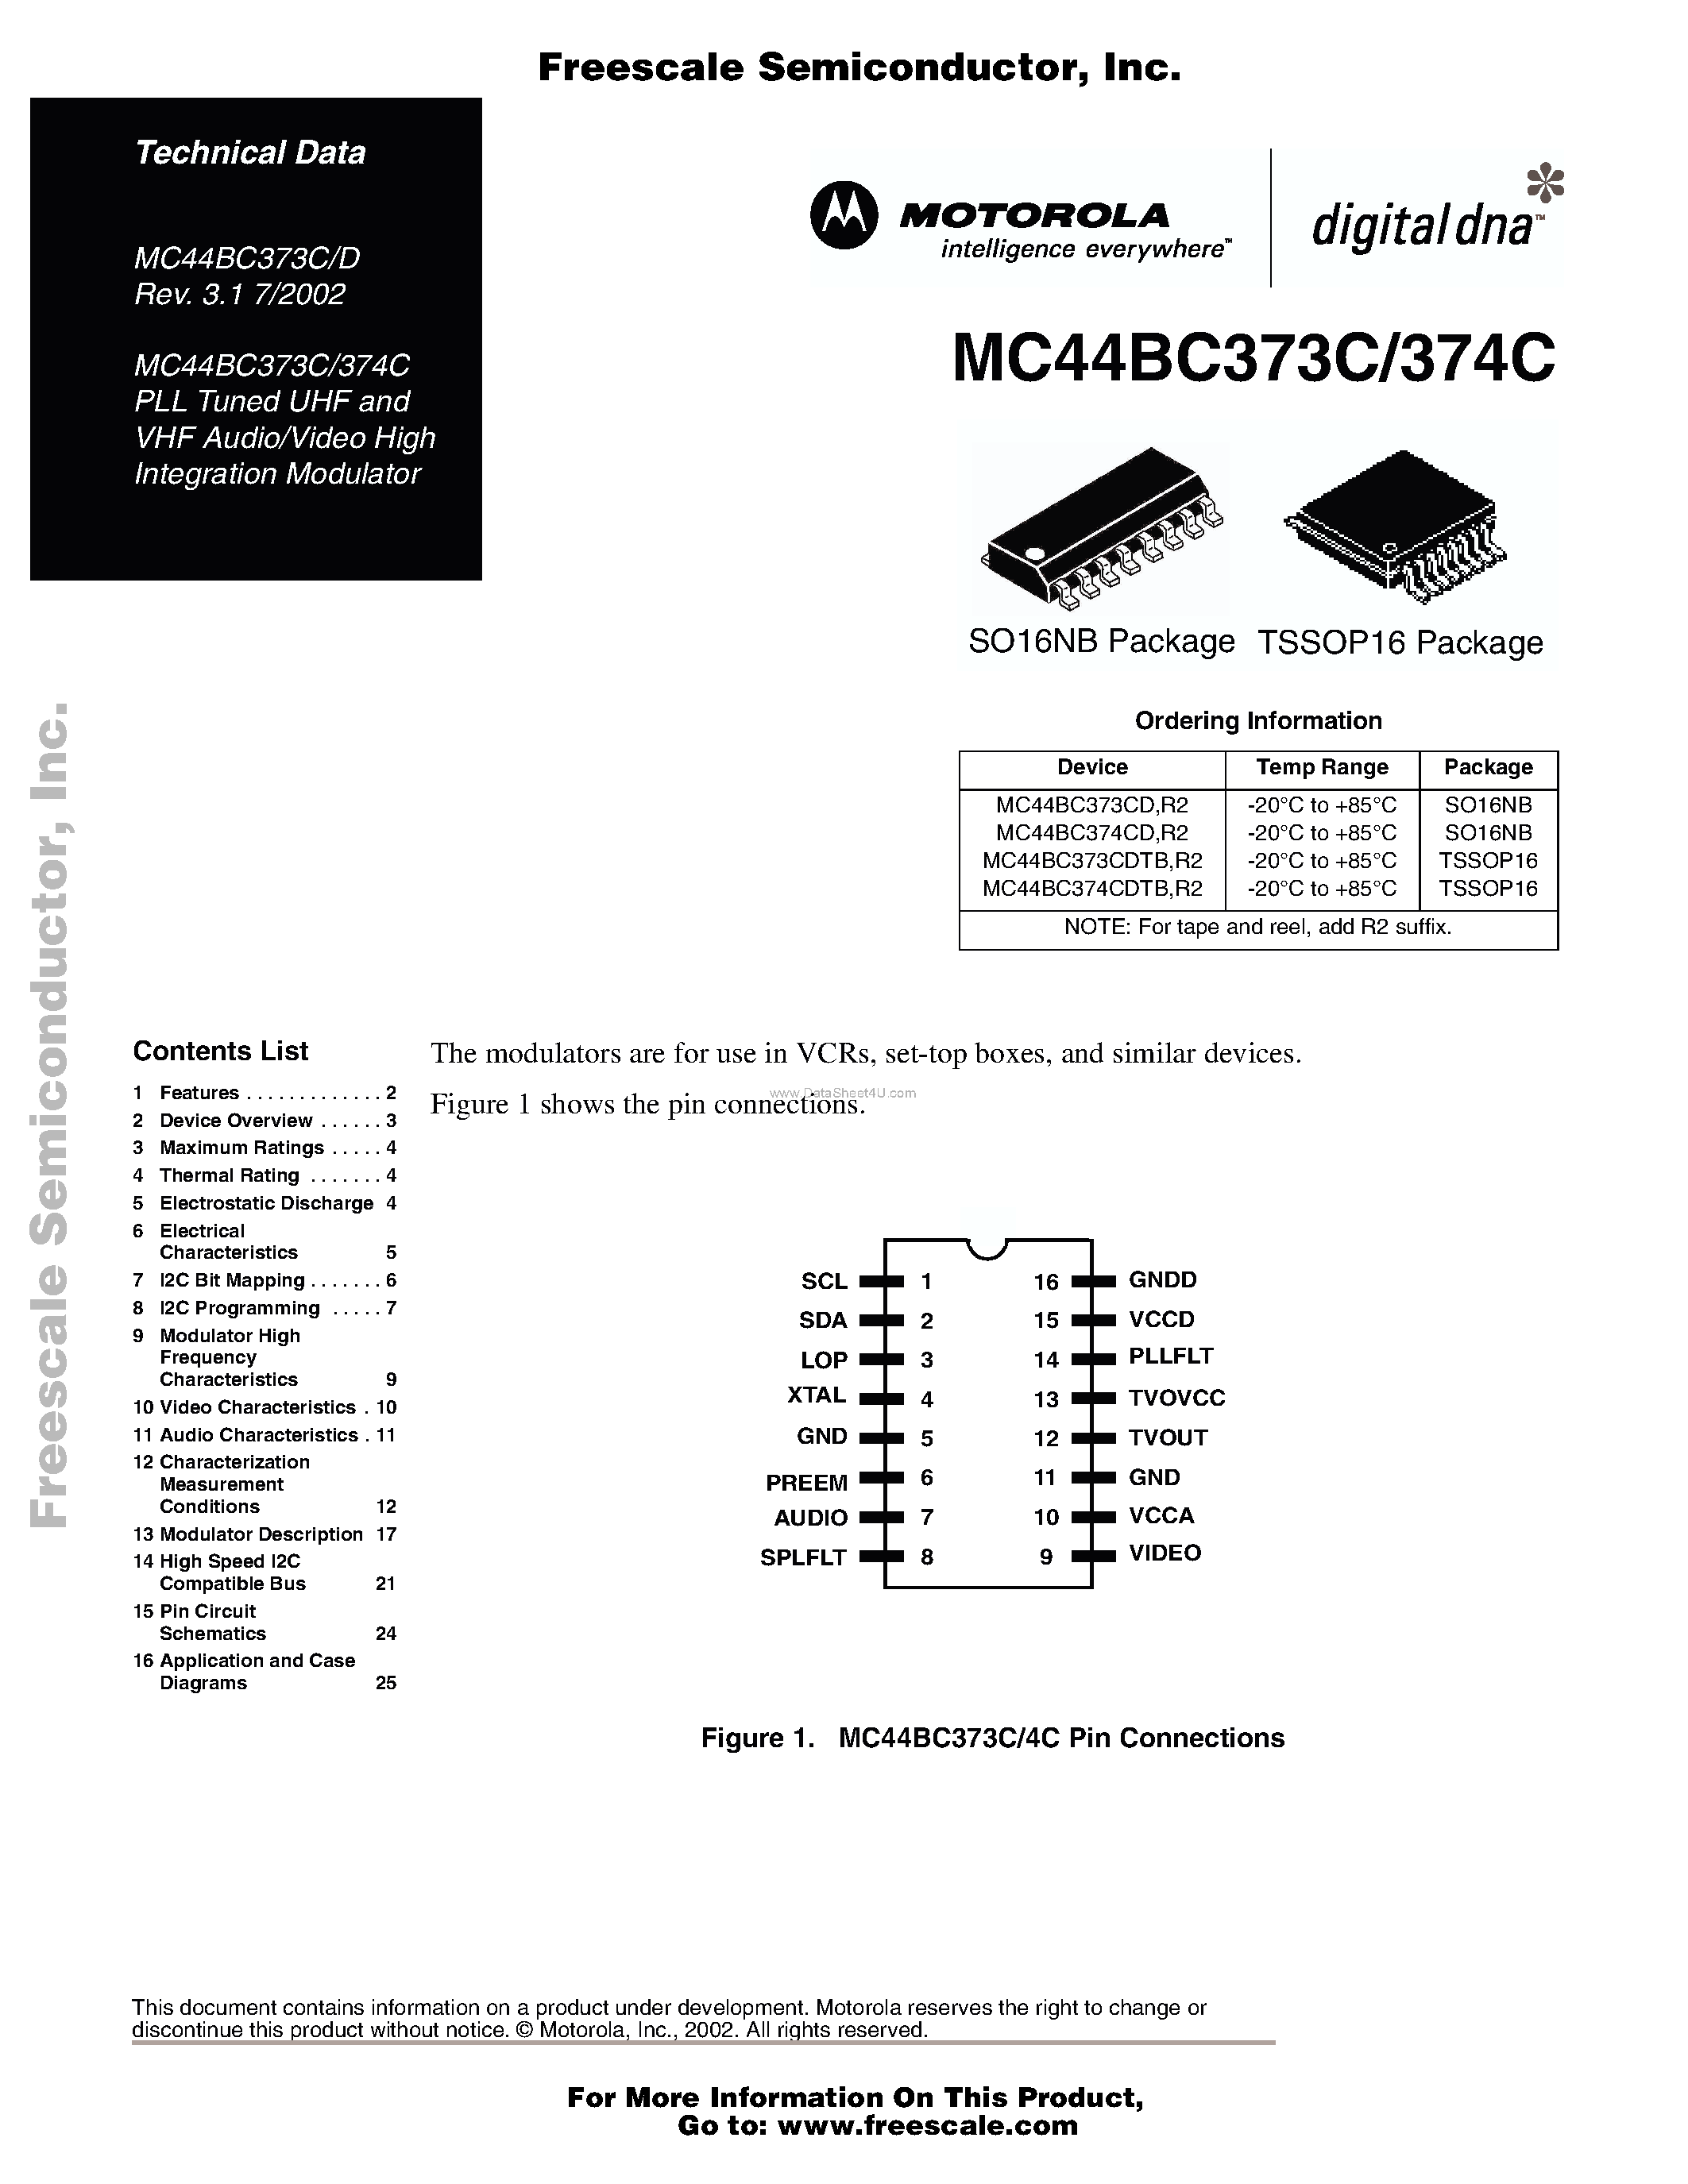 Даташит MC44BC373C - (MC44BC373C / MC44BC374C) PLL Tuned UHF and VHF Audio/Video High Integration Modulator страница 1